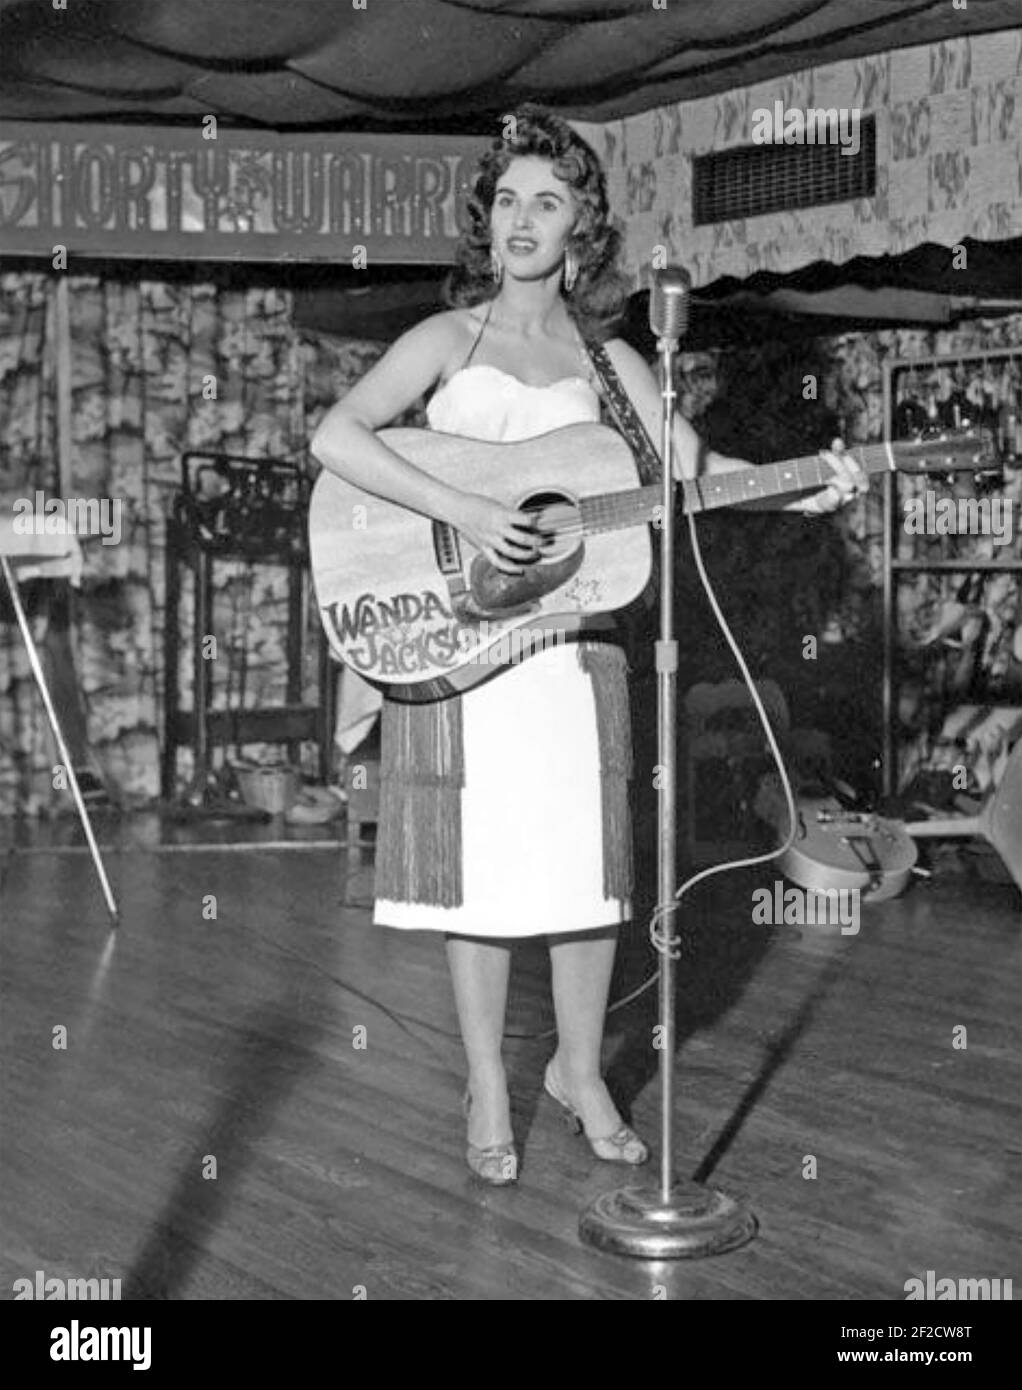 WANDA JACKSON American rockabilly musician about 1960 Stock Photo